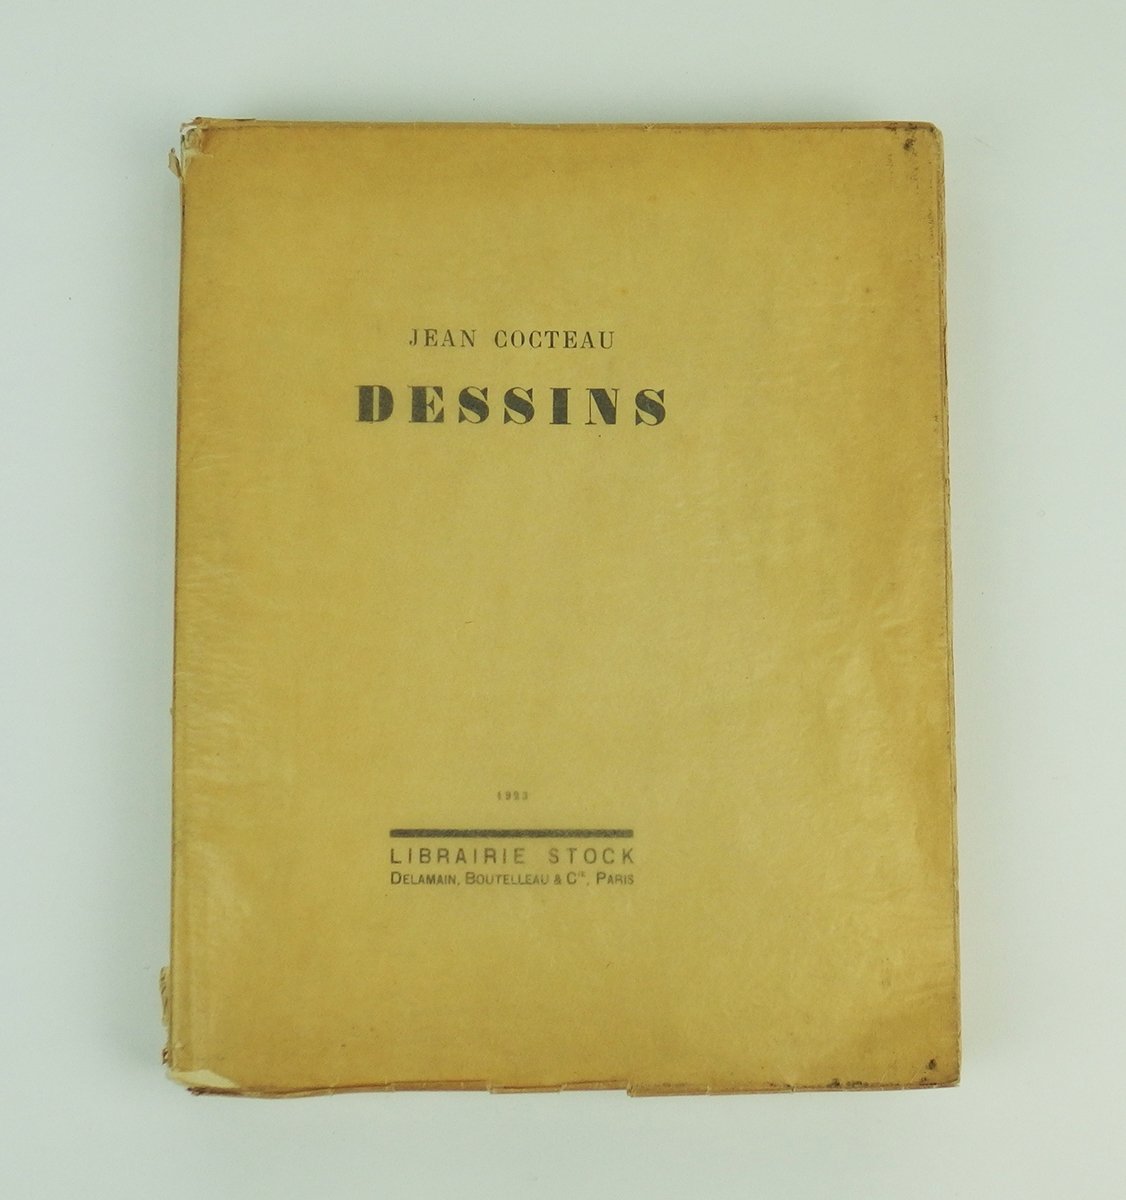 Dessins A Book By Jean Cocteau